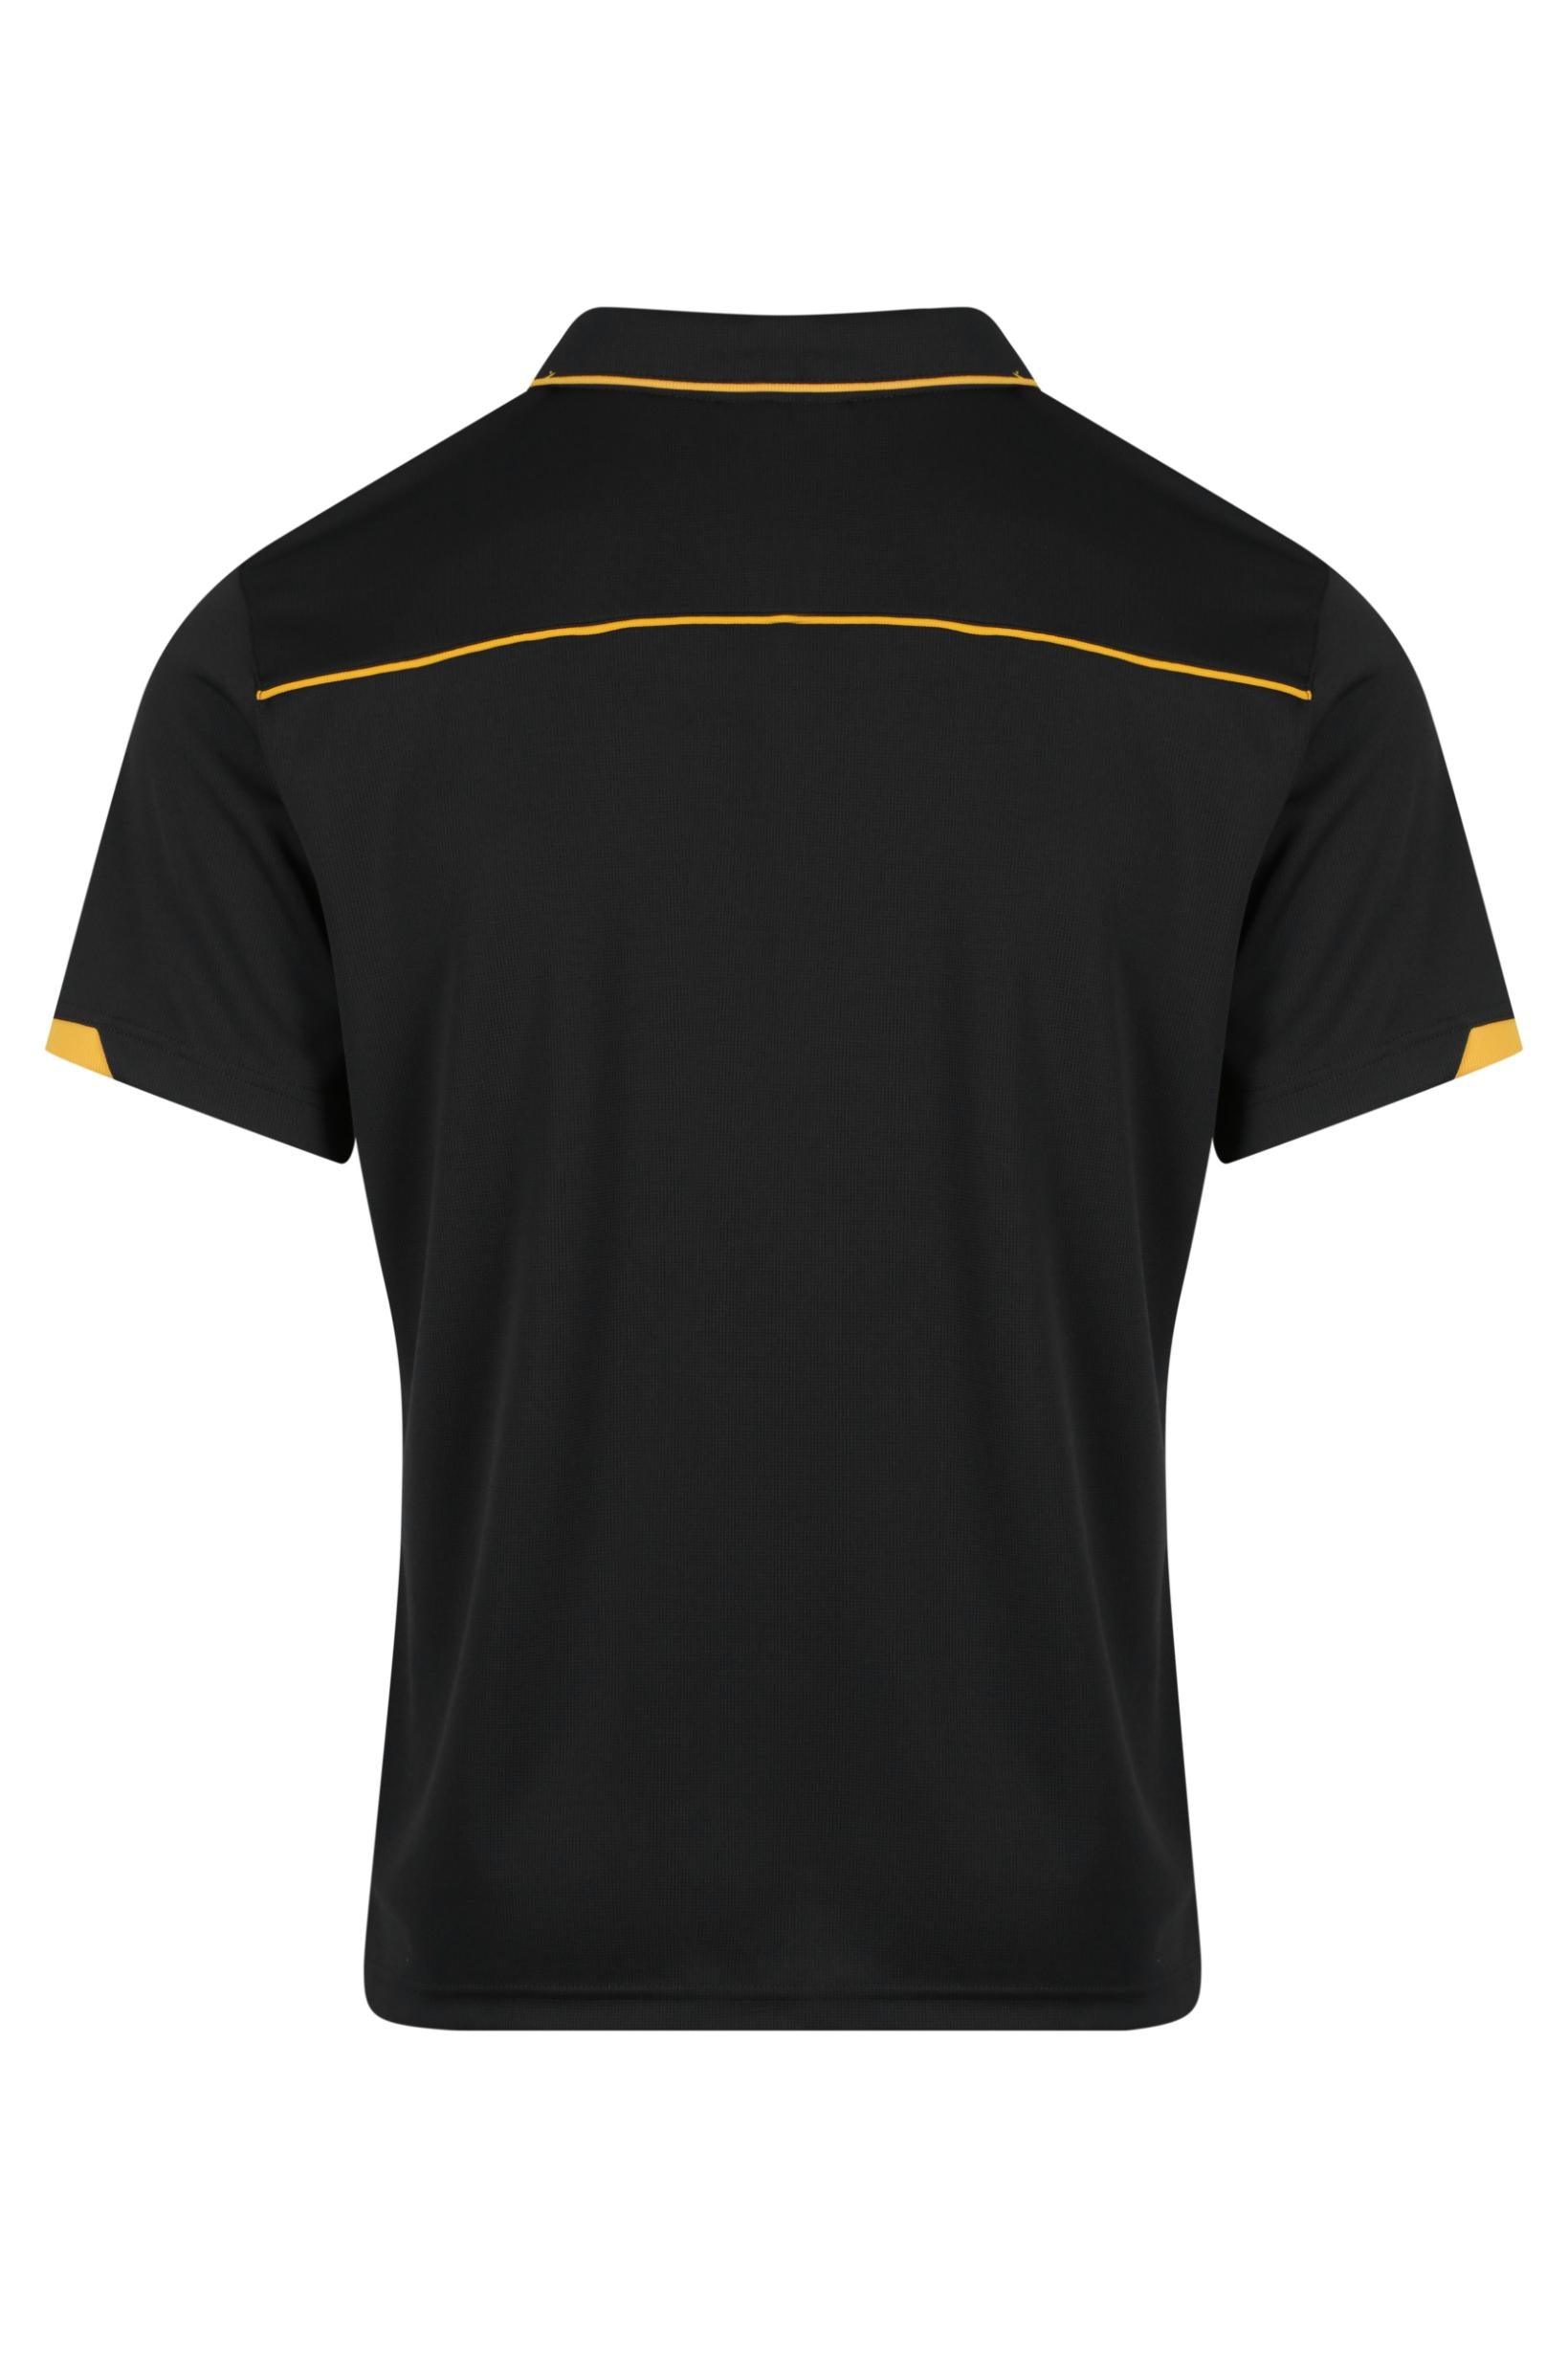 Currumbin Workwear Polo Shirts - Black/Gold Back